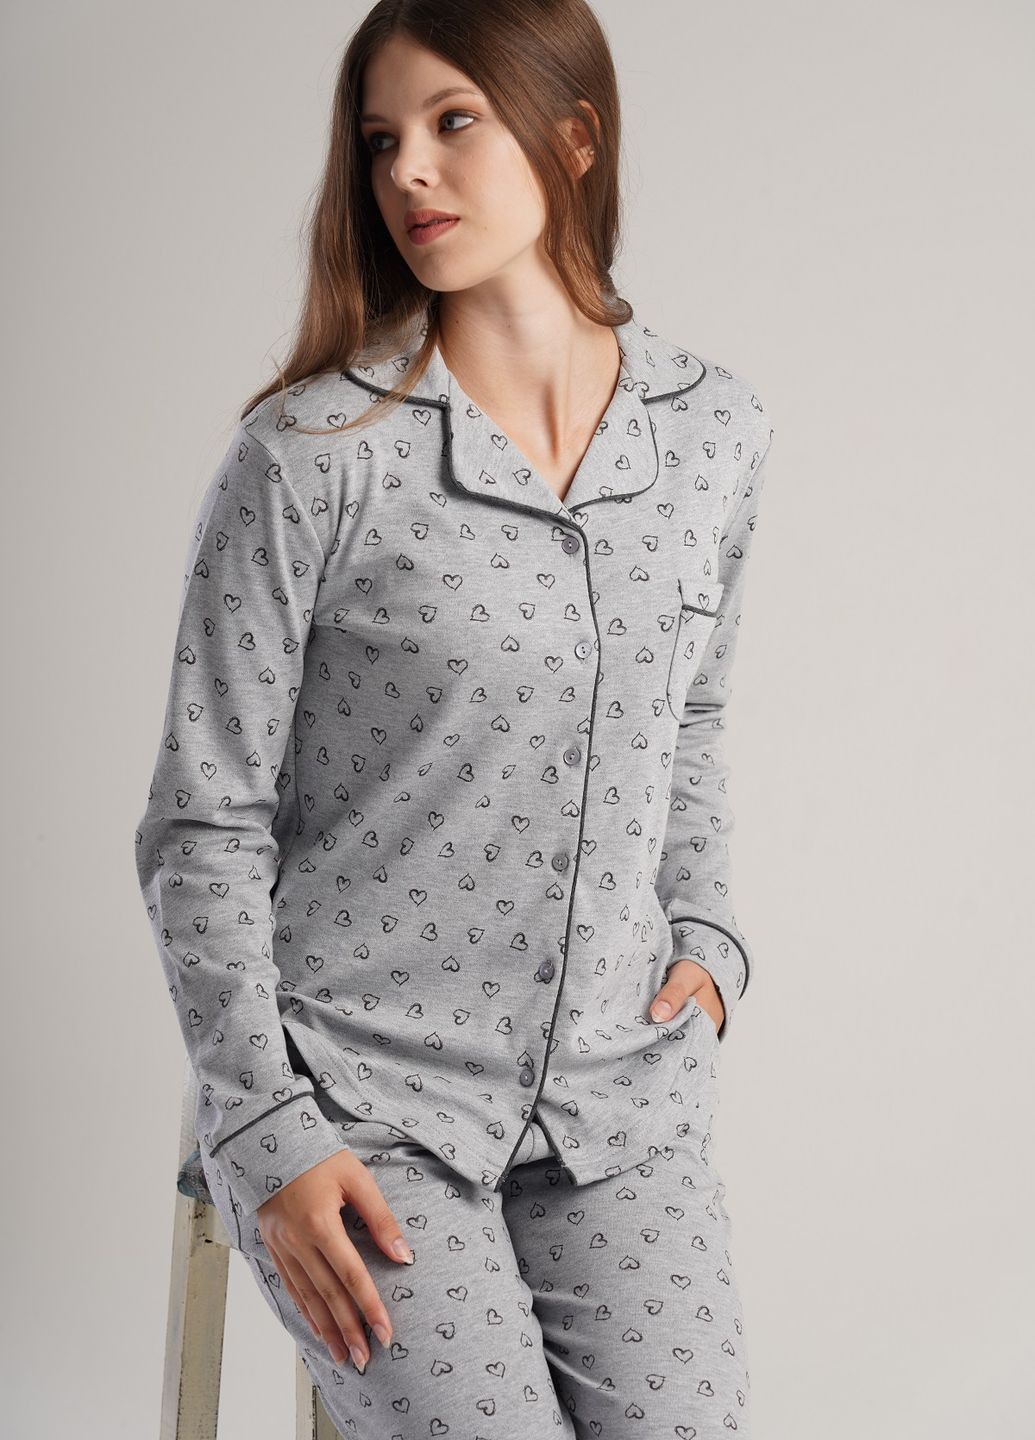 Серая зимняя пижама женская на пуговицах (рубашка, штаны) рубашка + брюки Vienetta